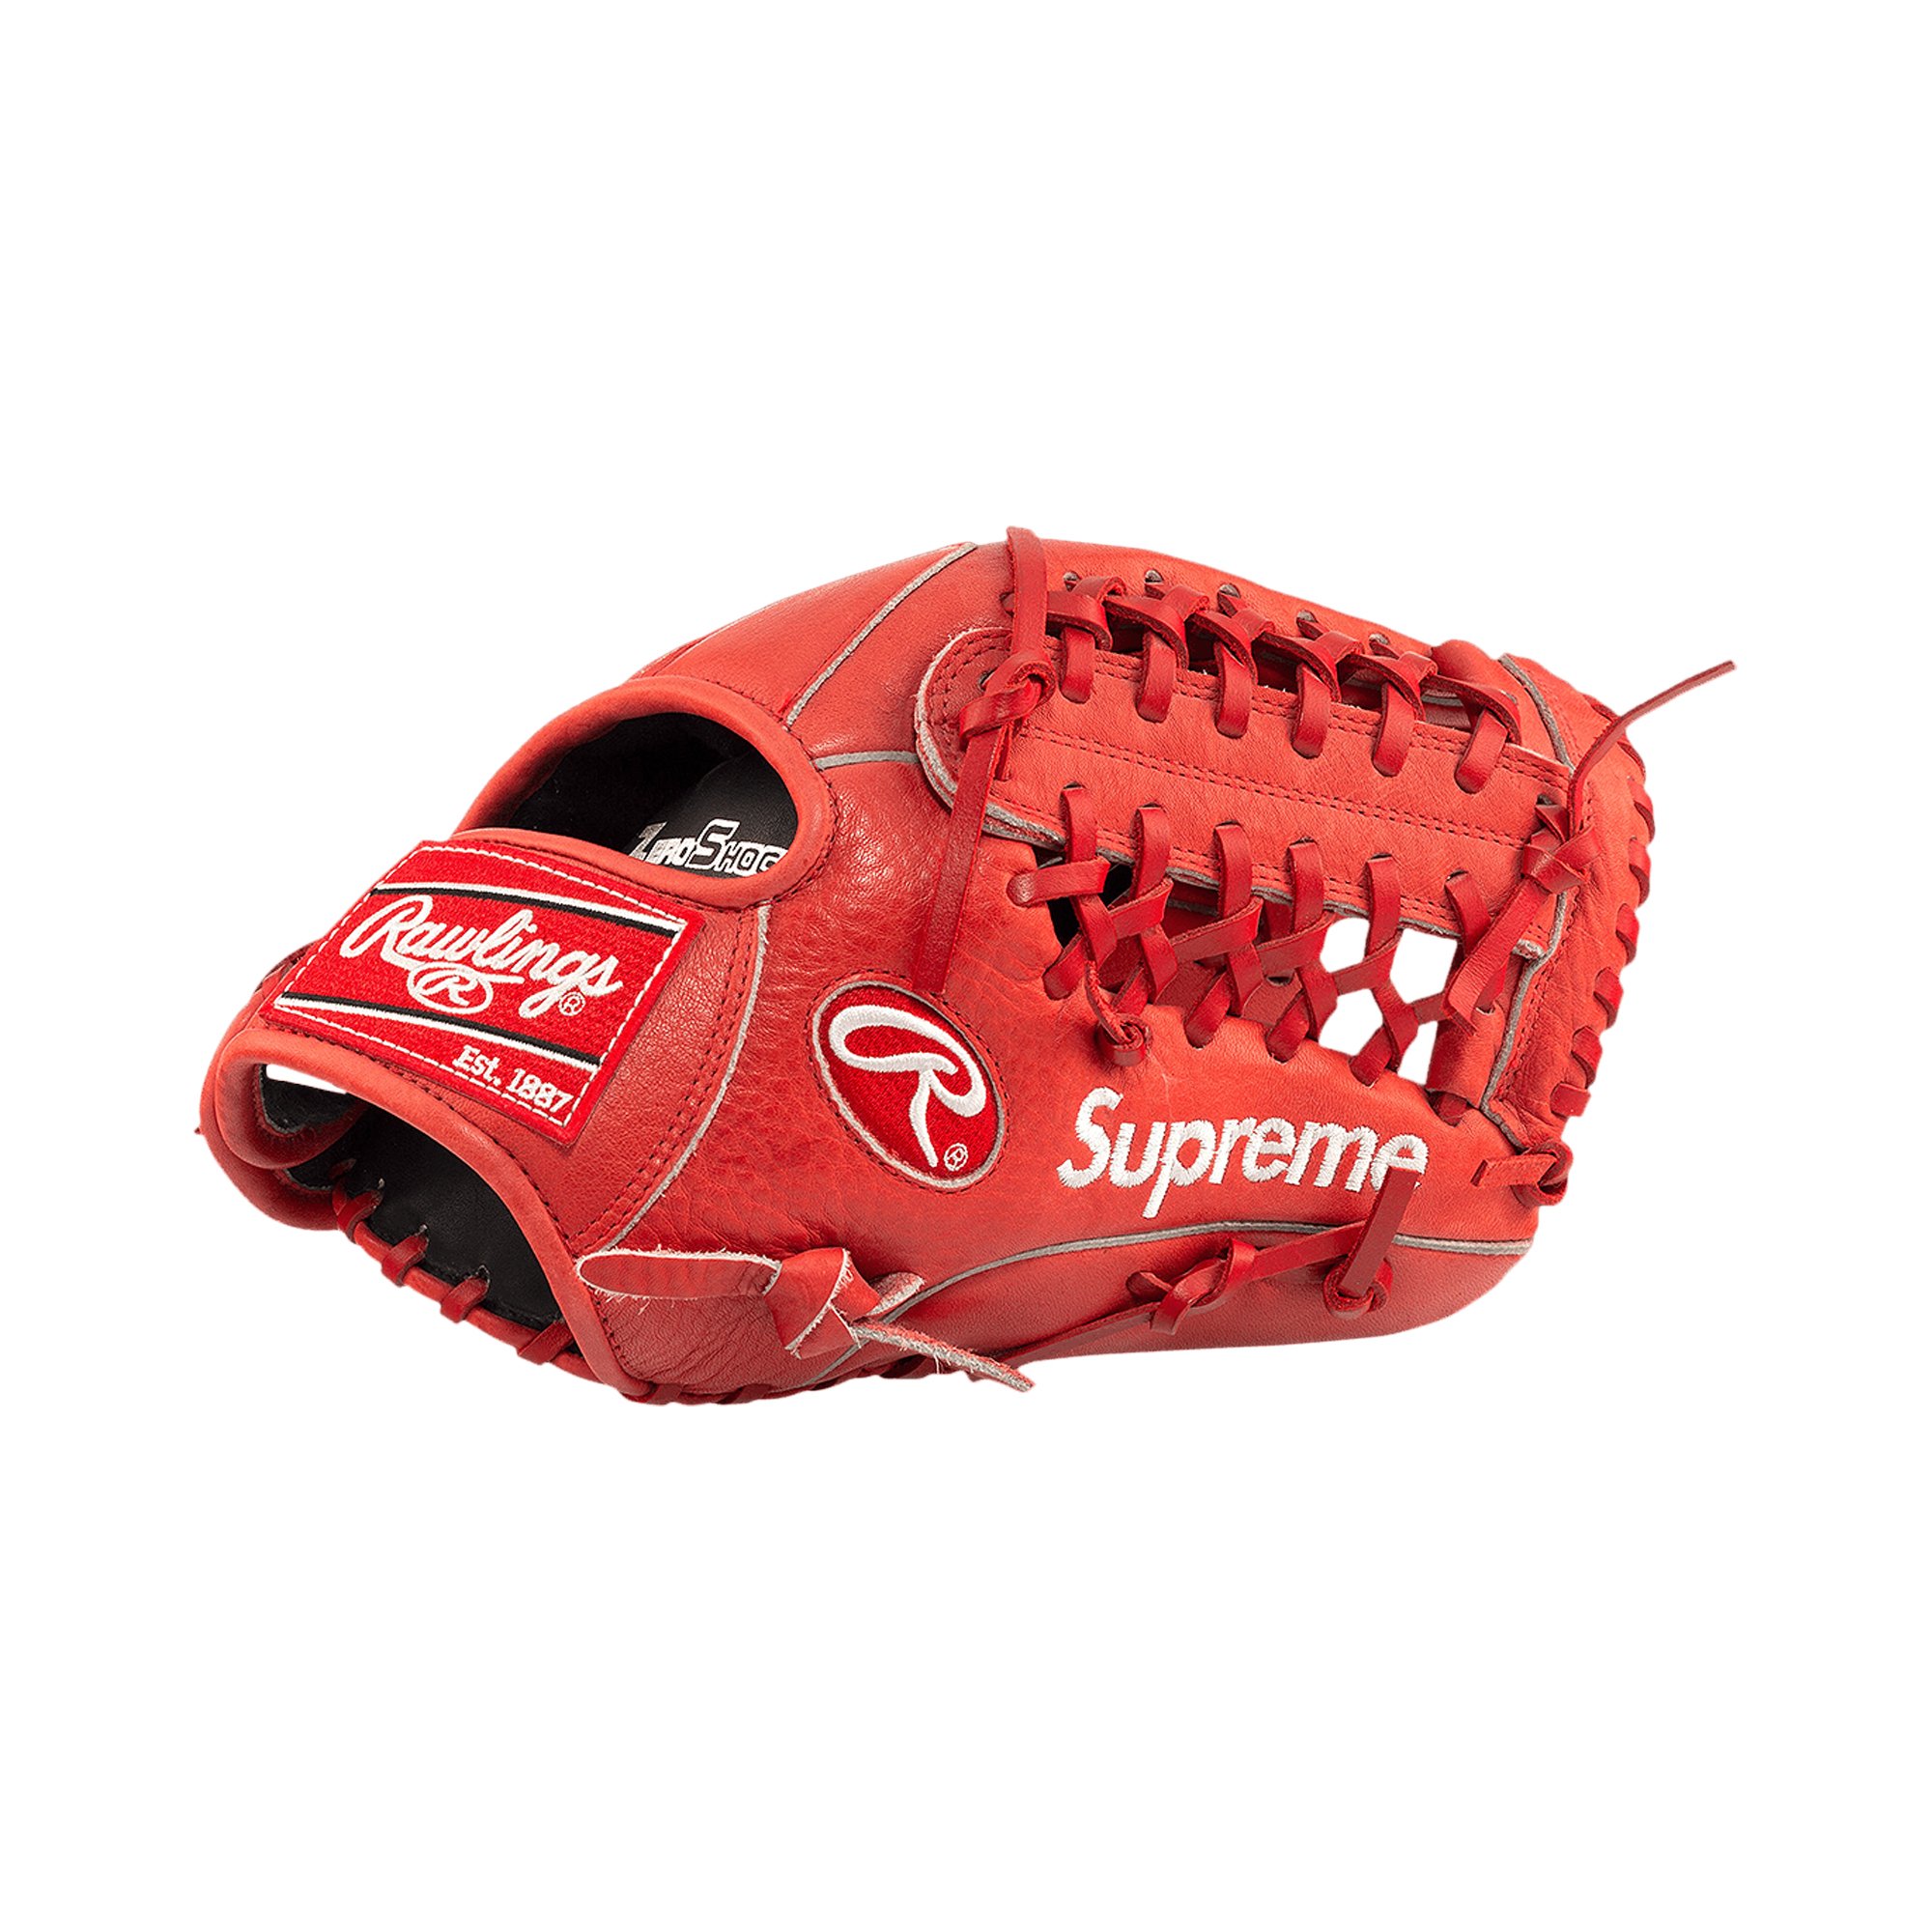 Buy Supreme x Rawlings Baseball Glove In Red - 0052 1SS120607RBG 